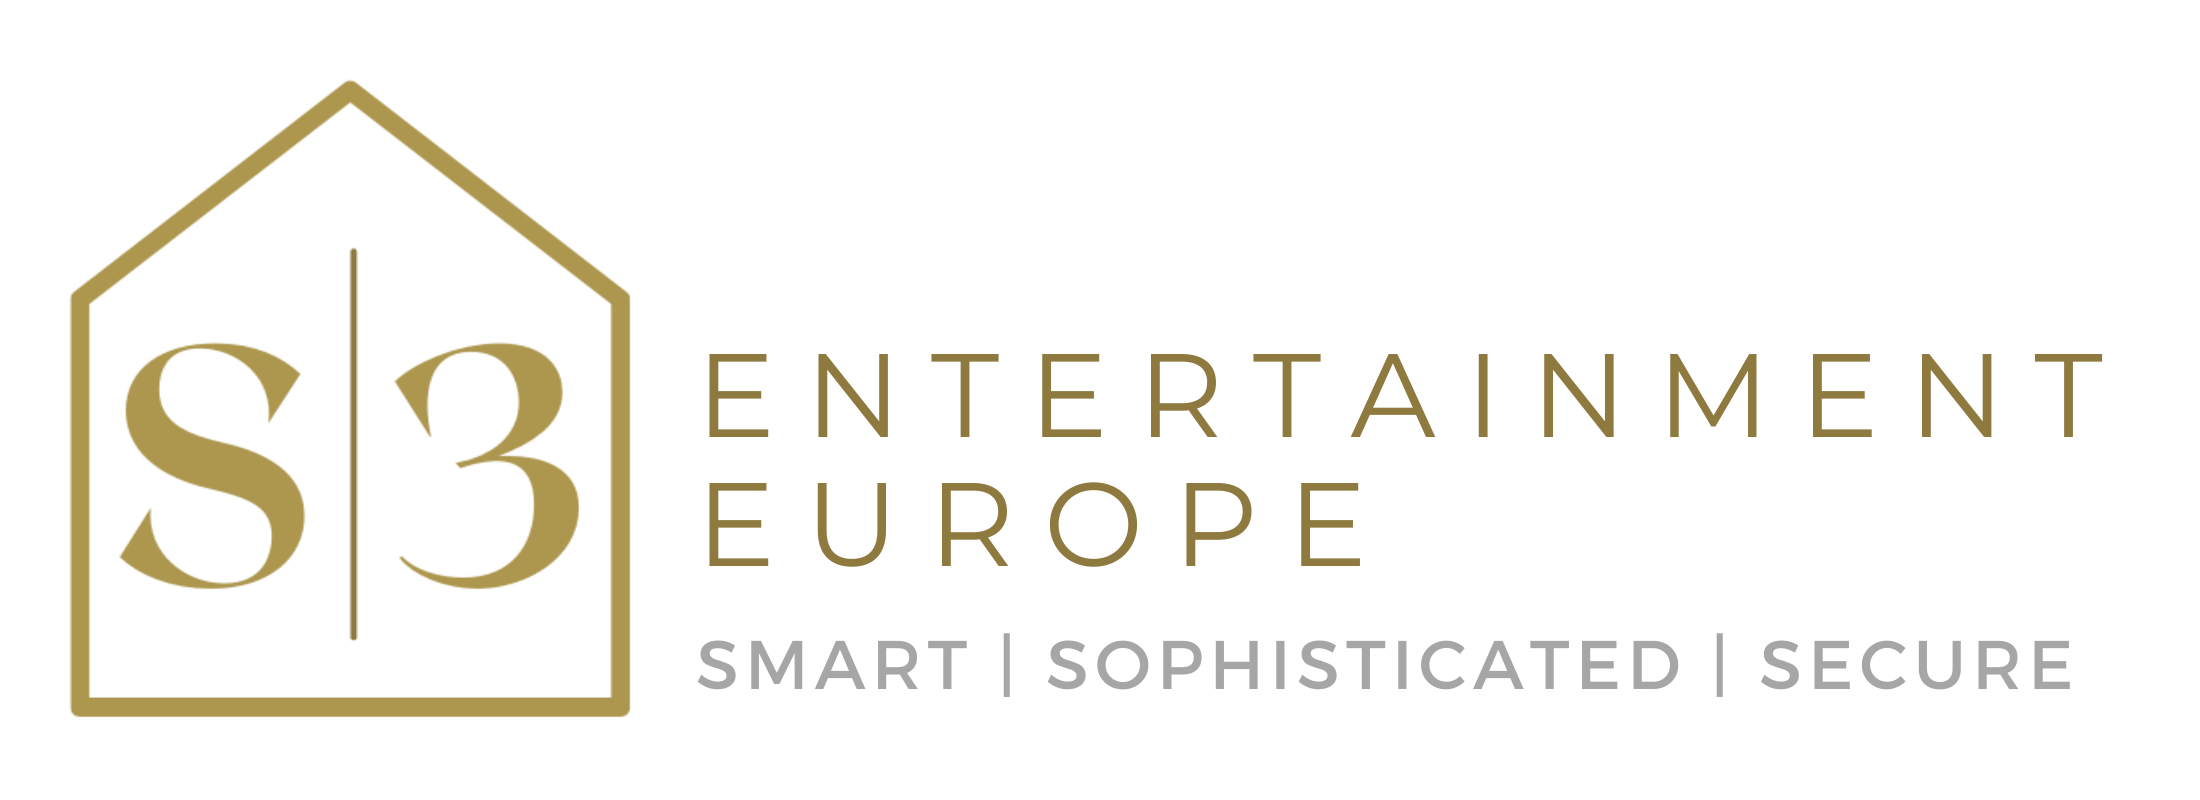 S3 Entertainment Europe